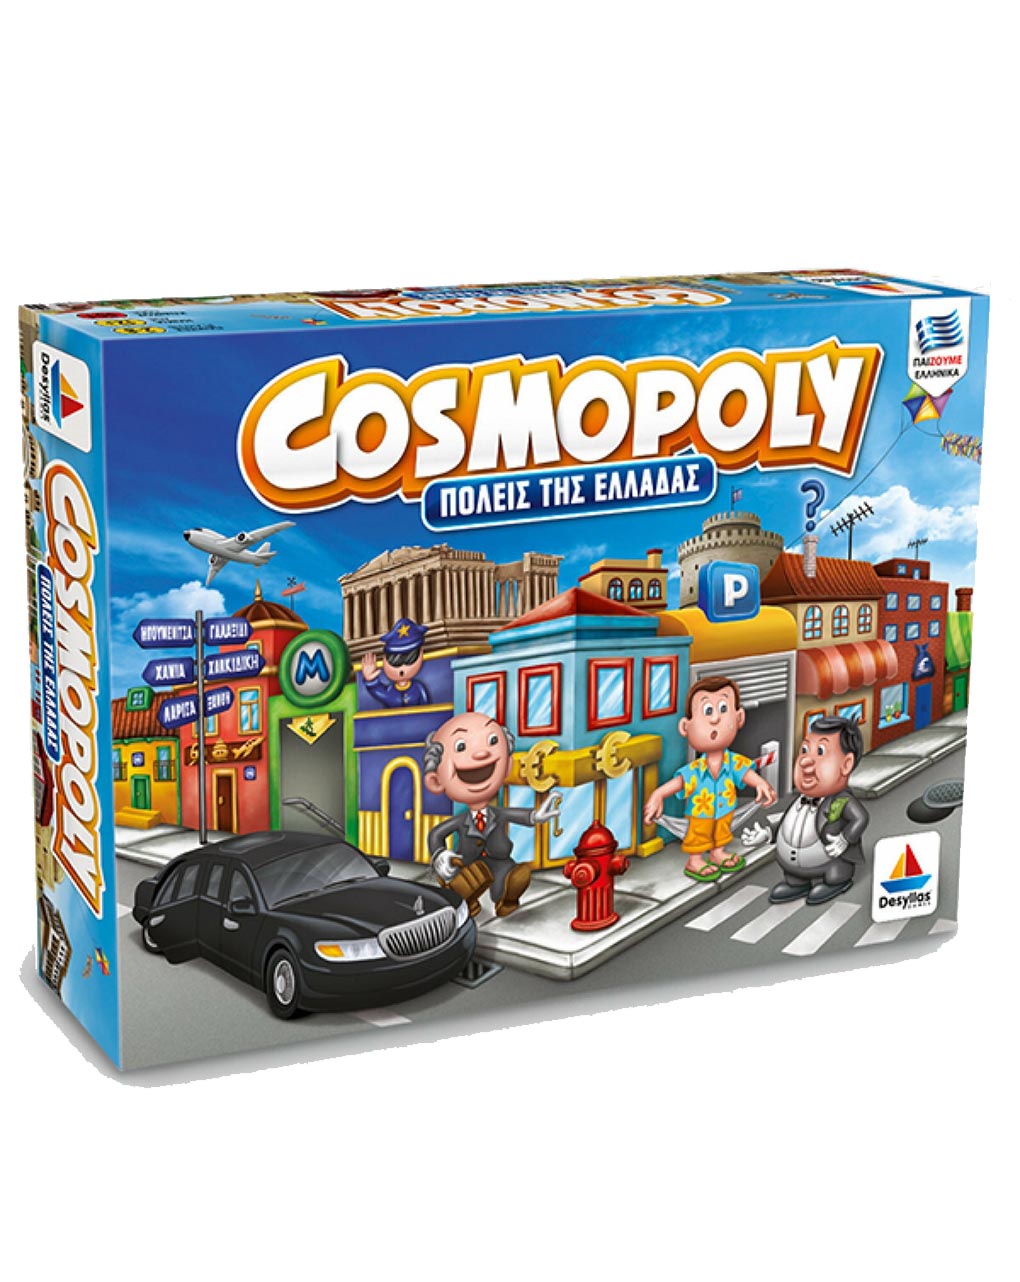 Desyllas games δεσύλλας επιτραπέζια οικογενειακά cosmopoly (πόλεις της ελλάδας) 100556 - DESYLLAS GAMES